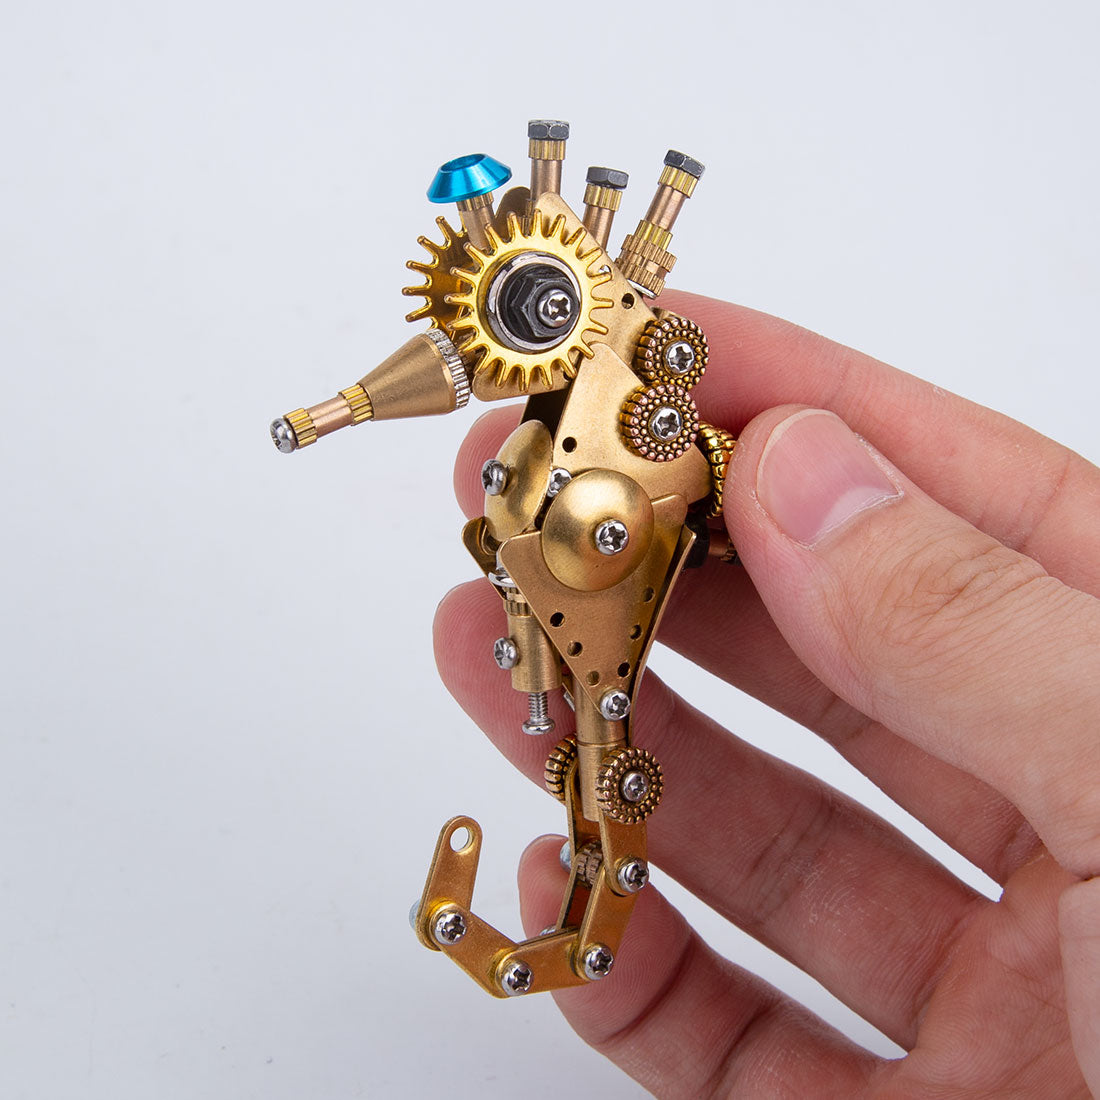 Steampunk DIY Baby Seahorse Metal Model Kits for Kids